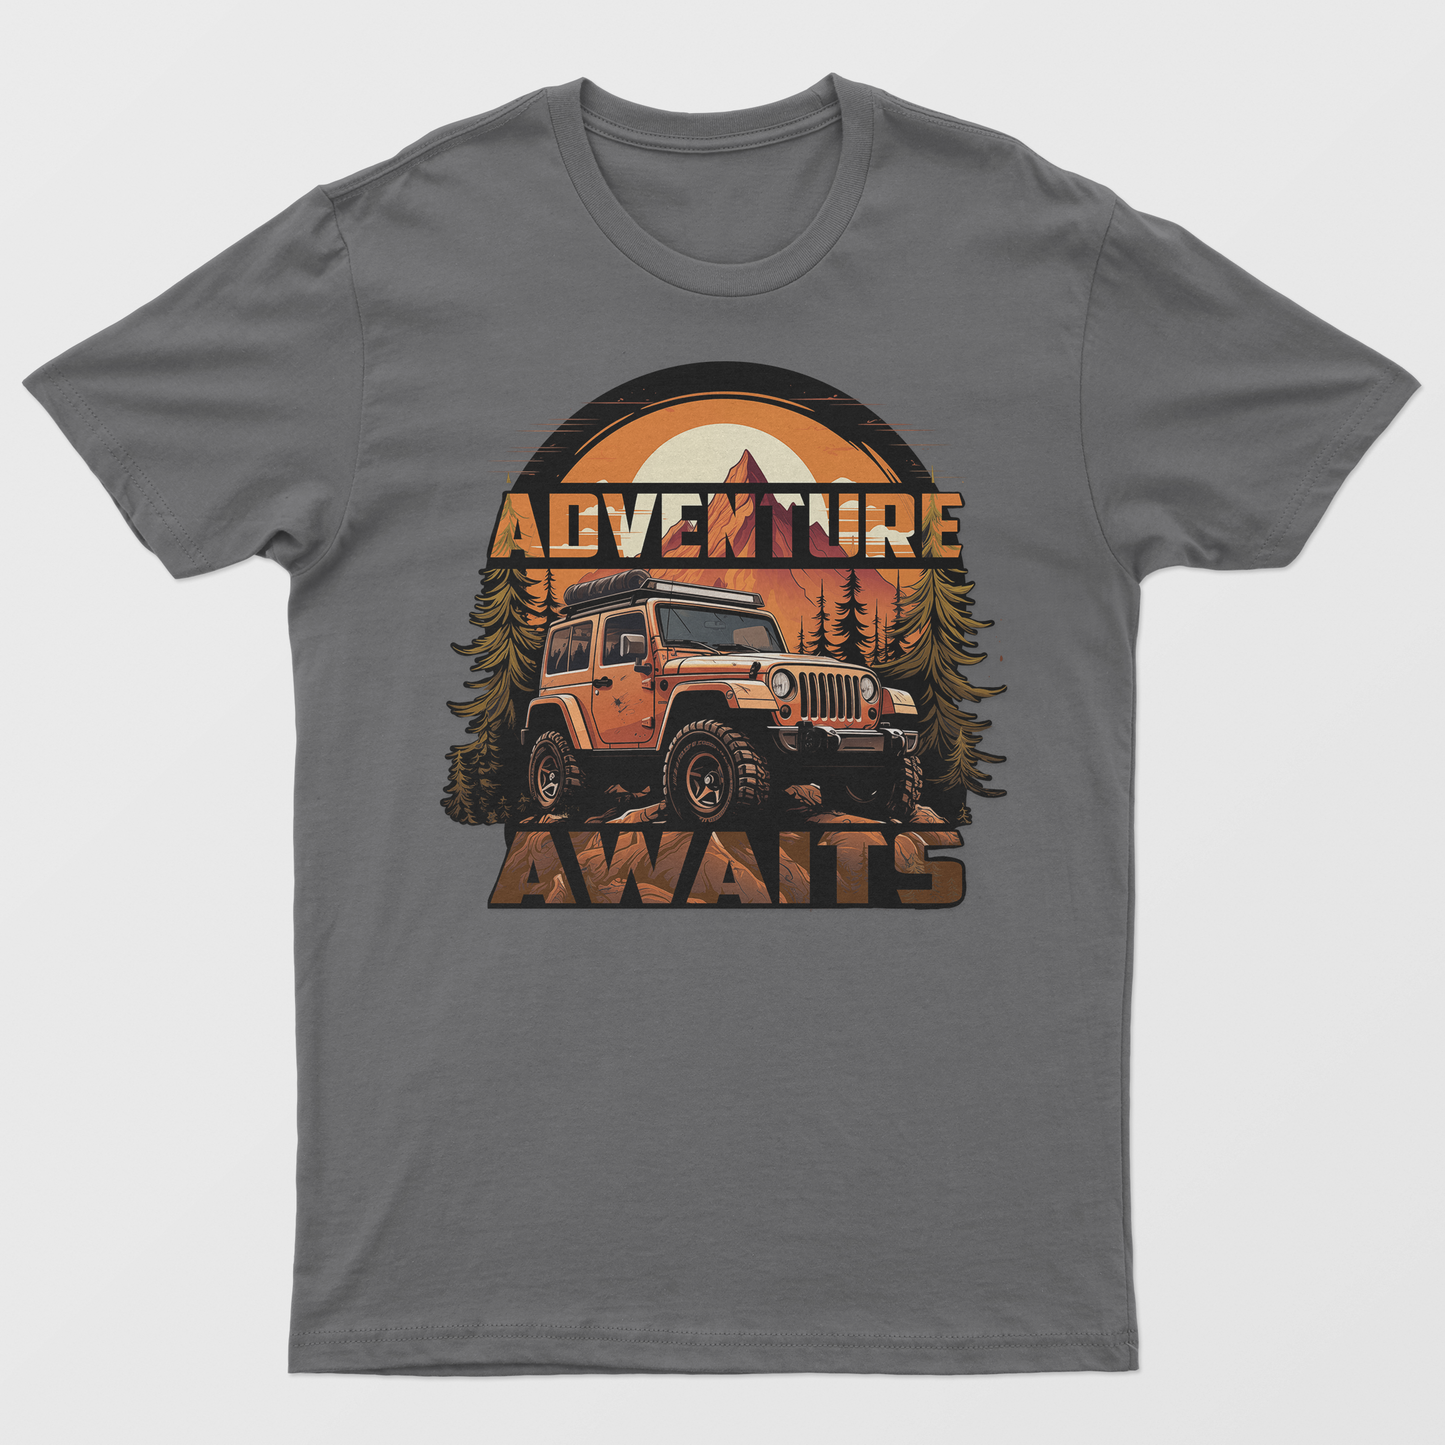 Adventure Awaits Unisex Graphic Tee - Outdoor Explorer T-Shirt